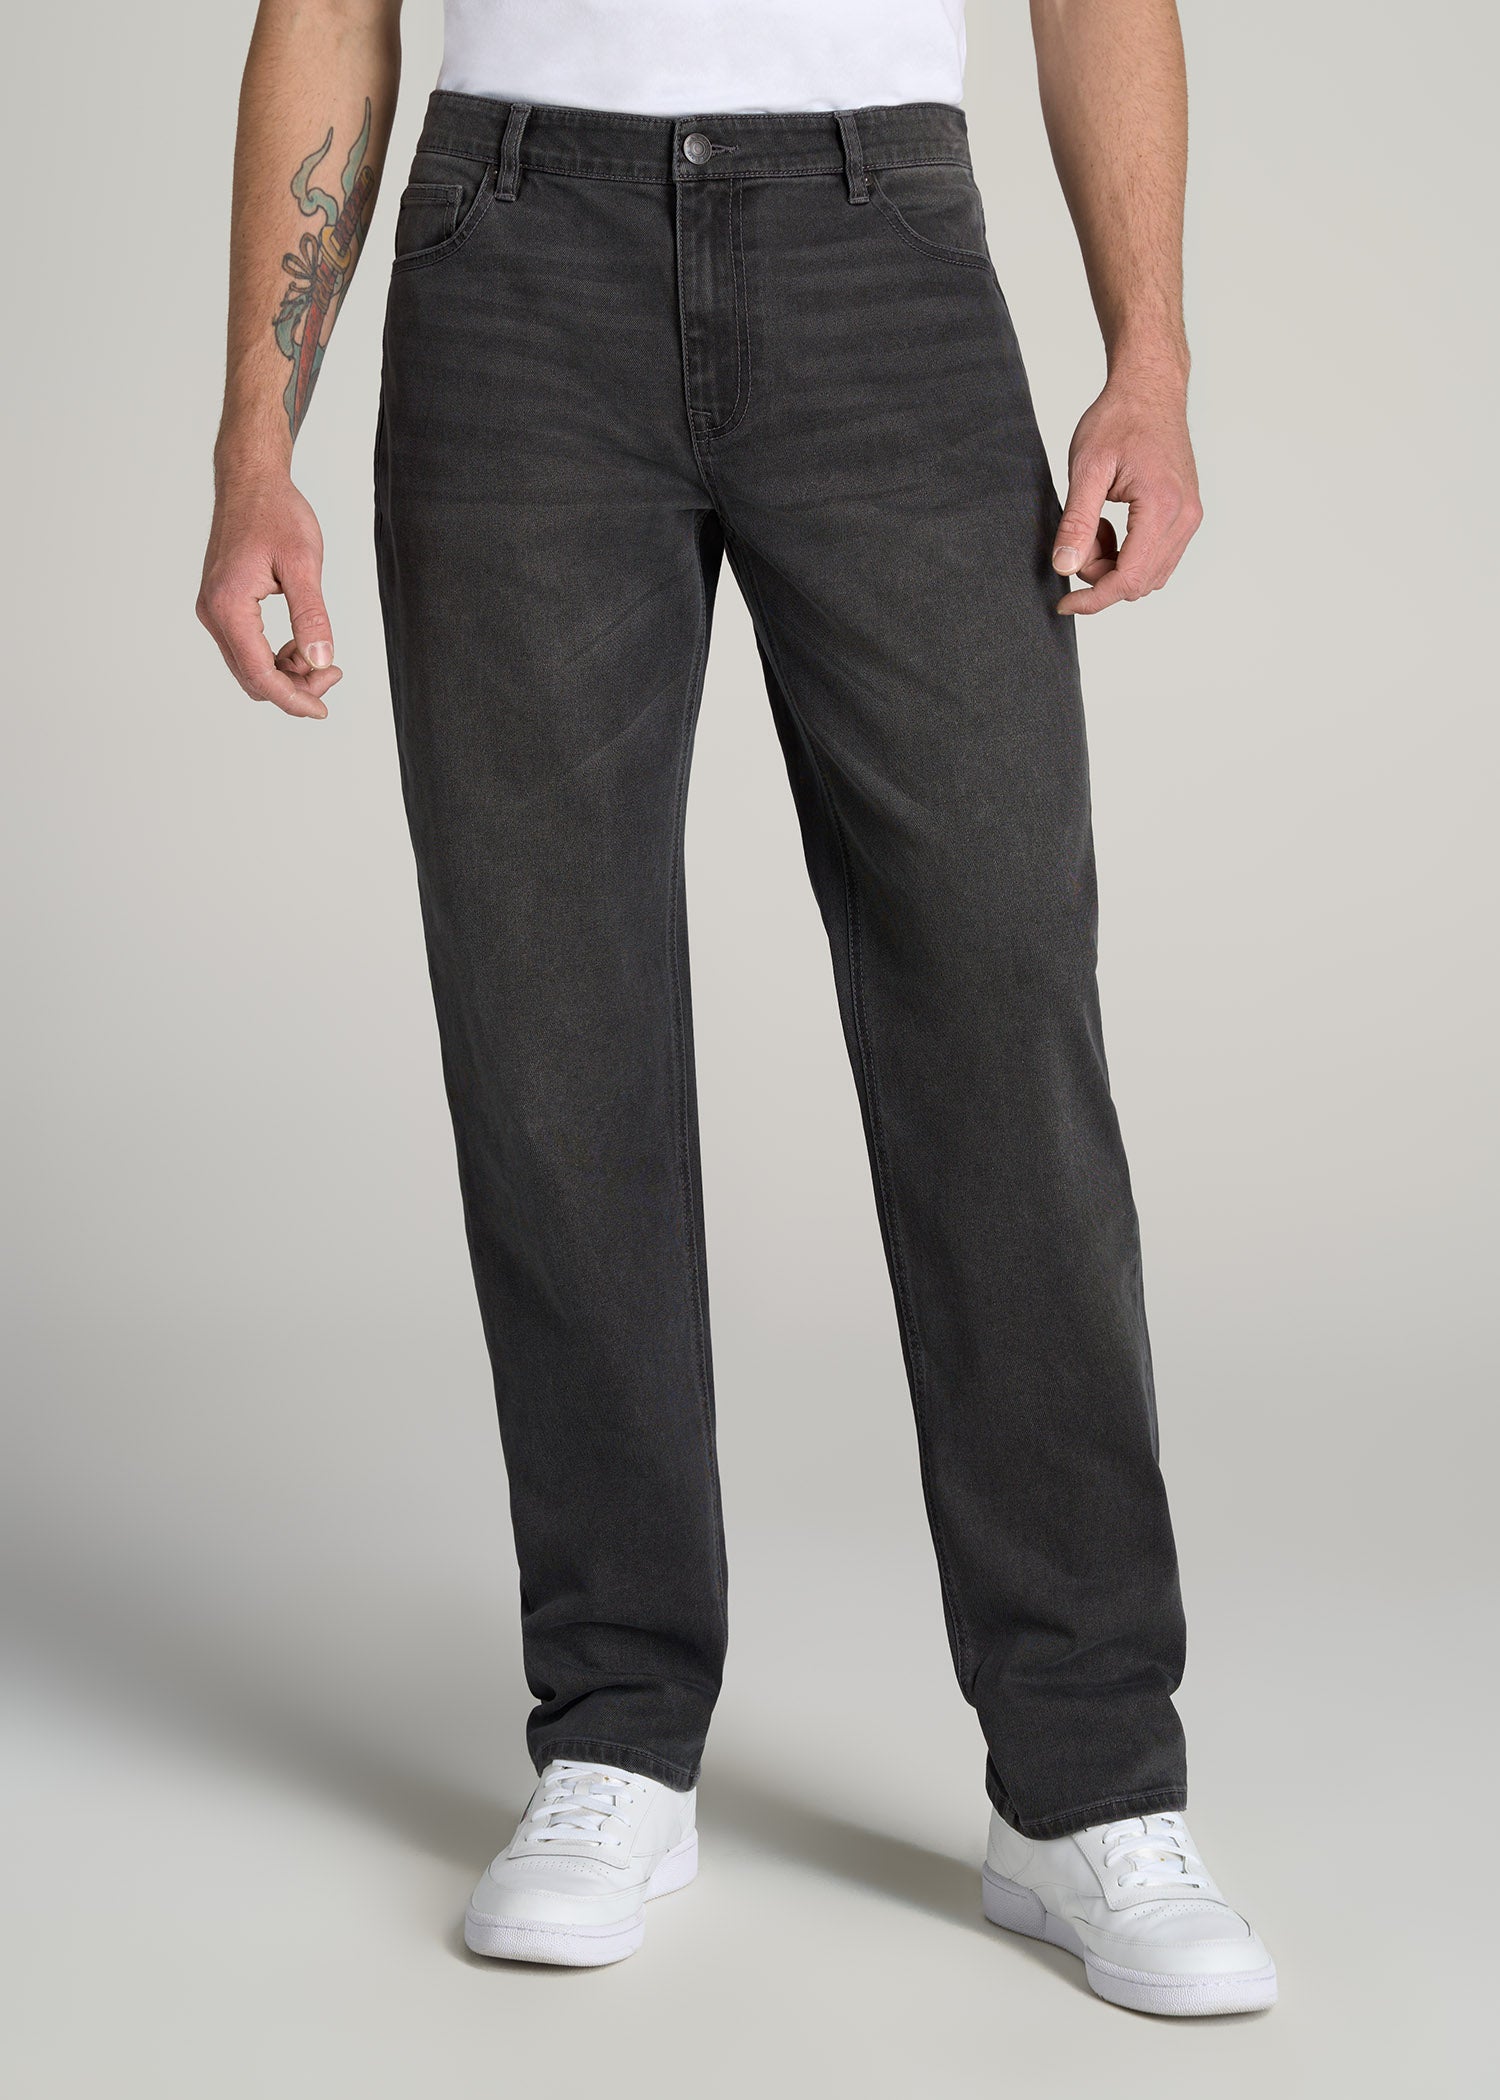 LJ&S Men's Tall Jeans Straight Leg Industrial Grey